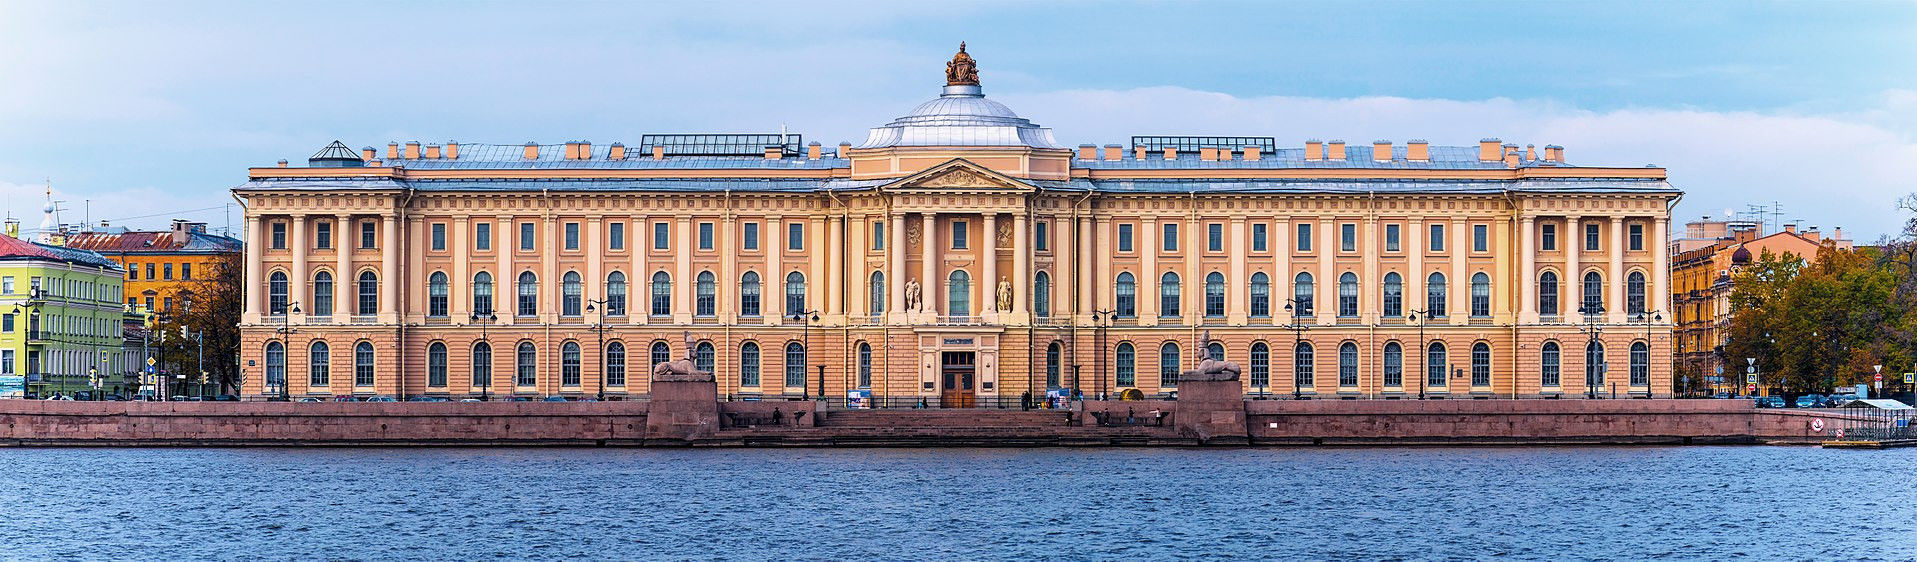 Imperial academy of Arts in Saint Petersburg Russia